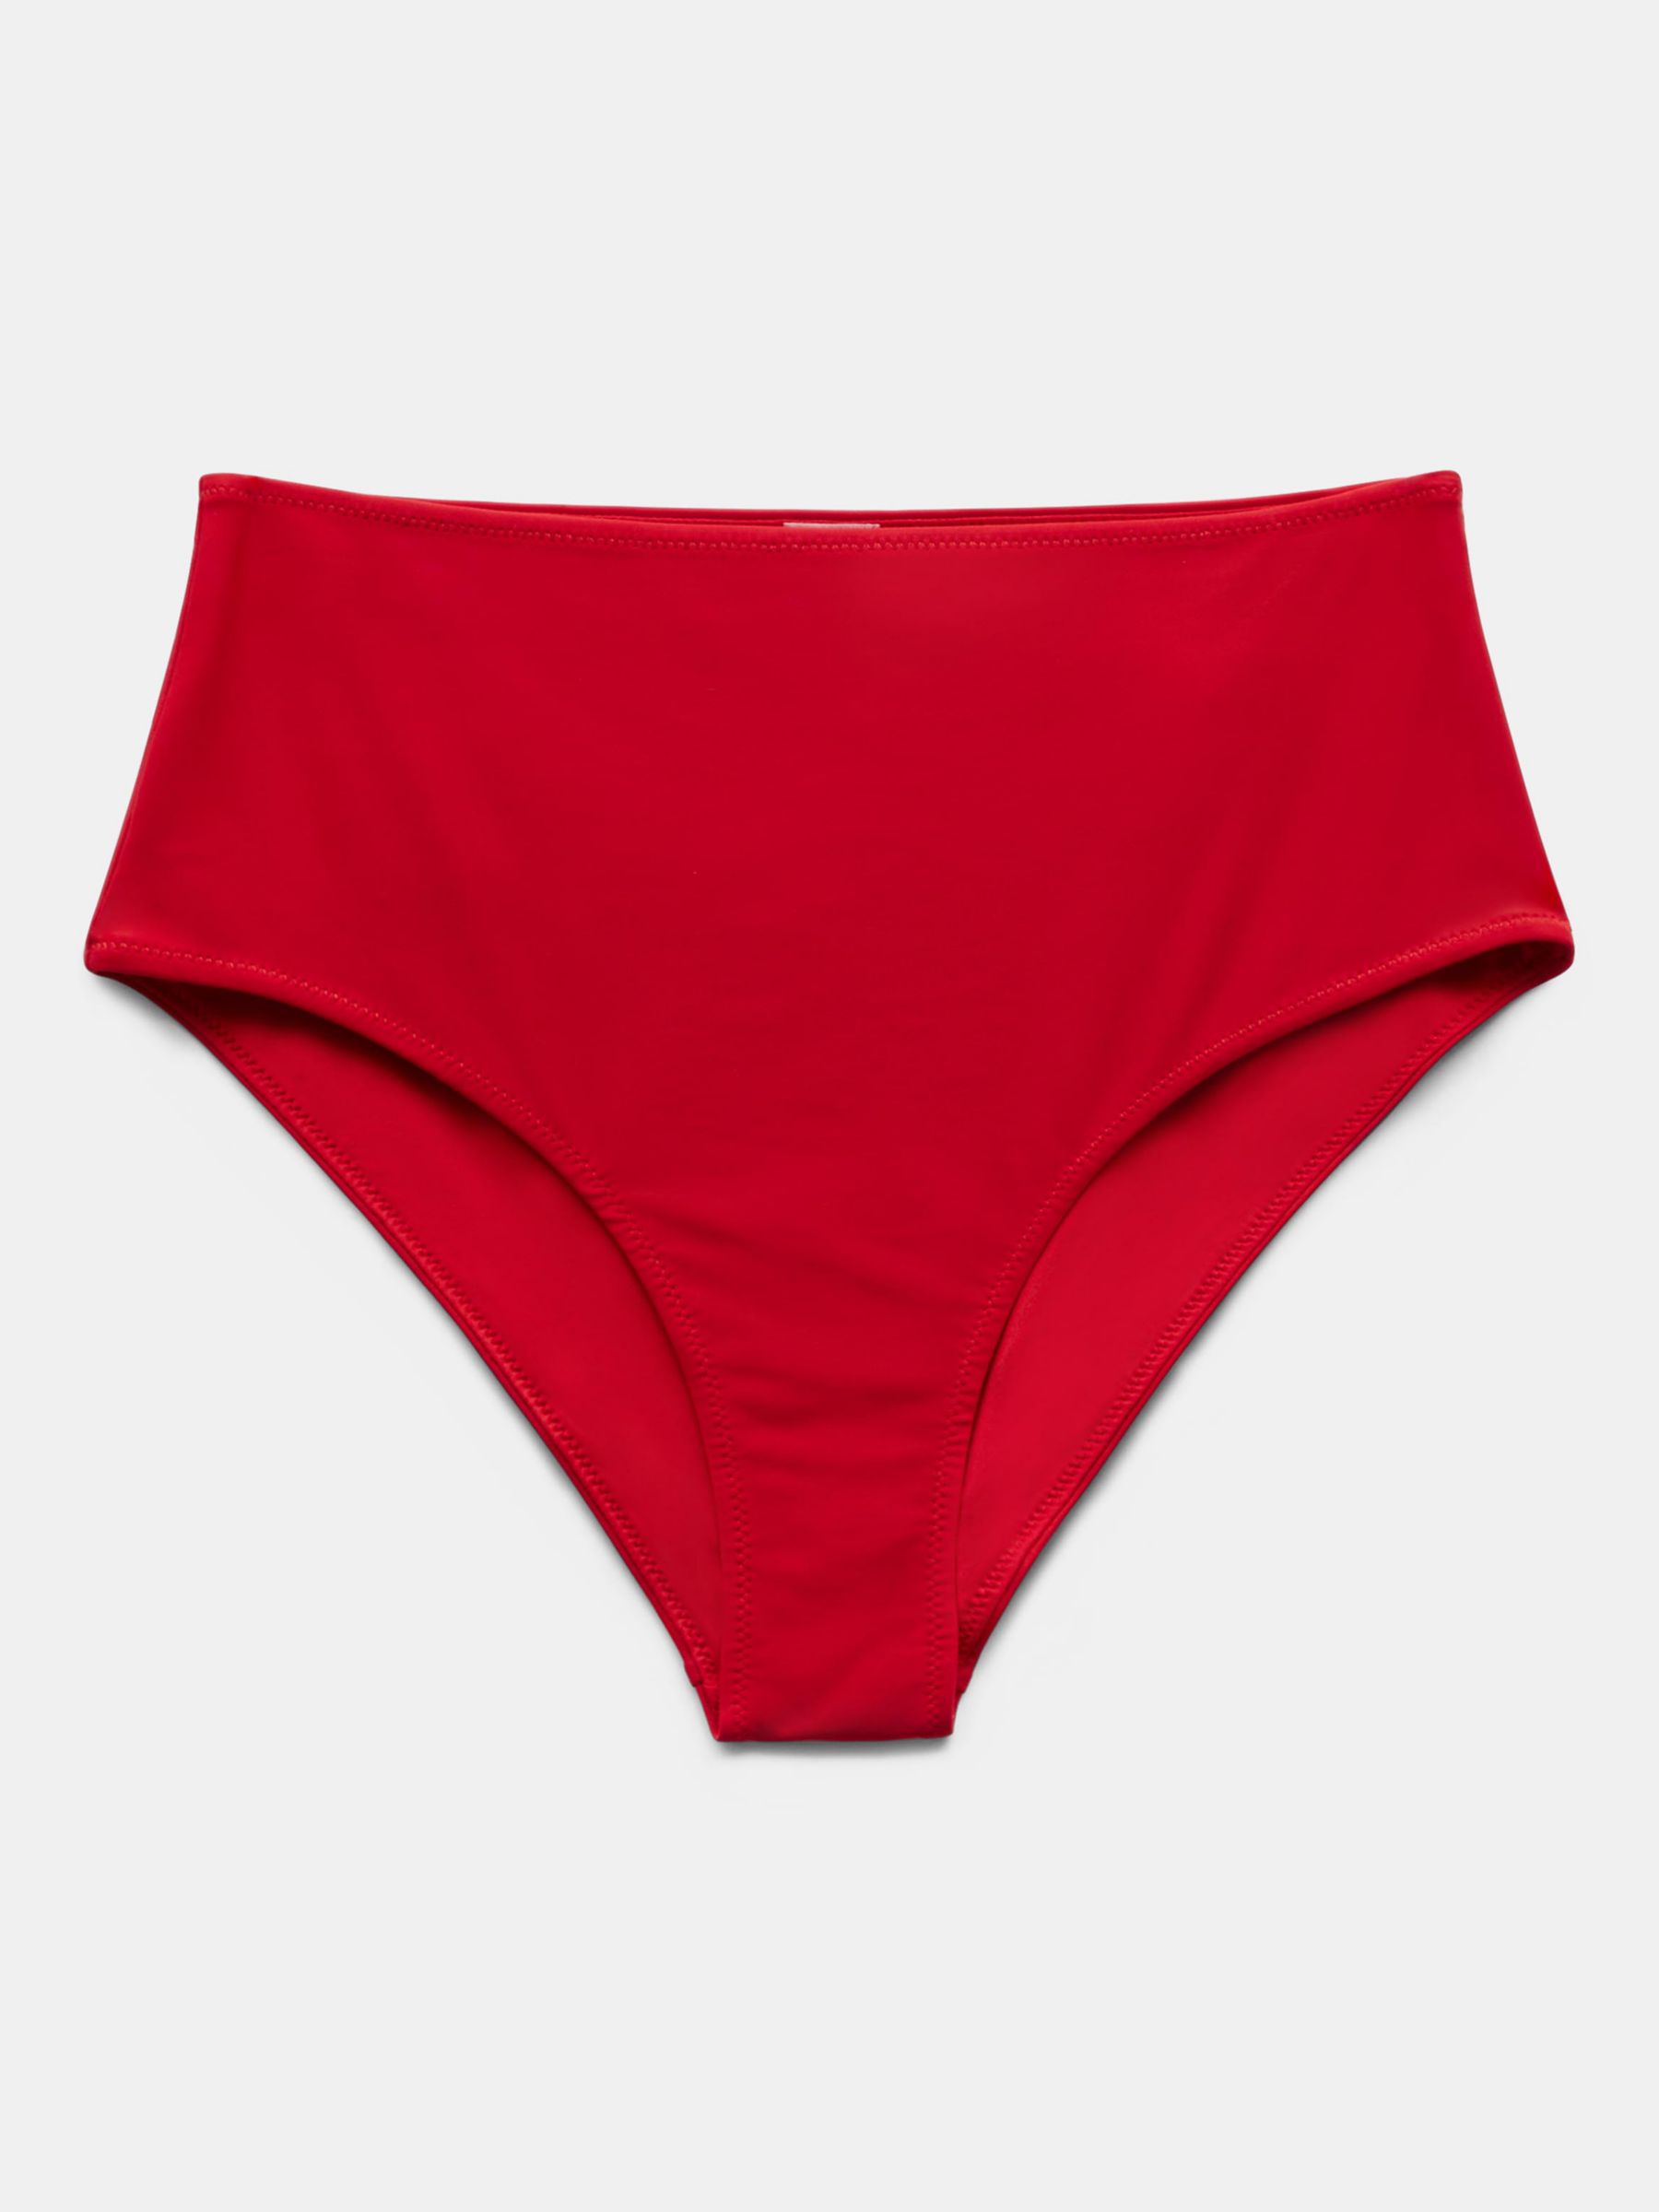 HUSH Heather High Waisted Bikini Bottoms, Redcoat, 14